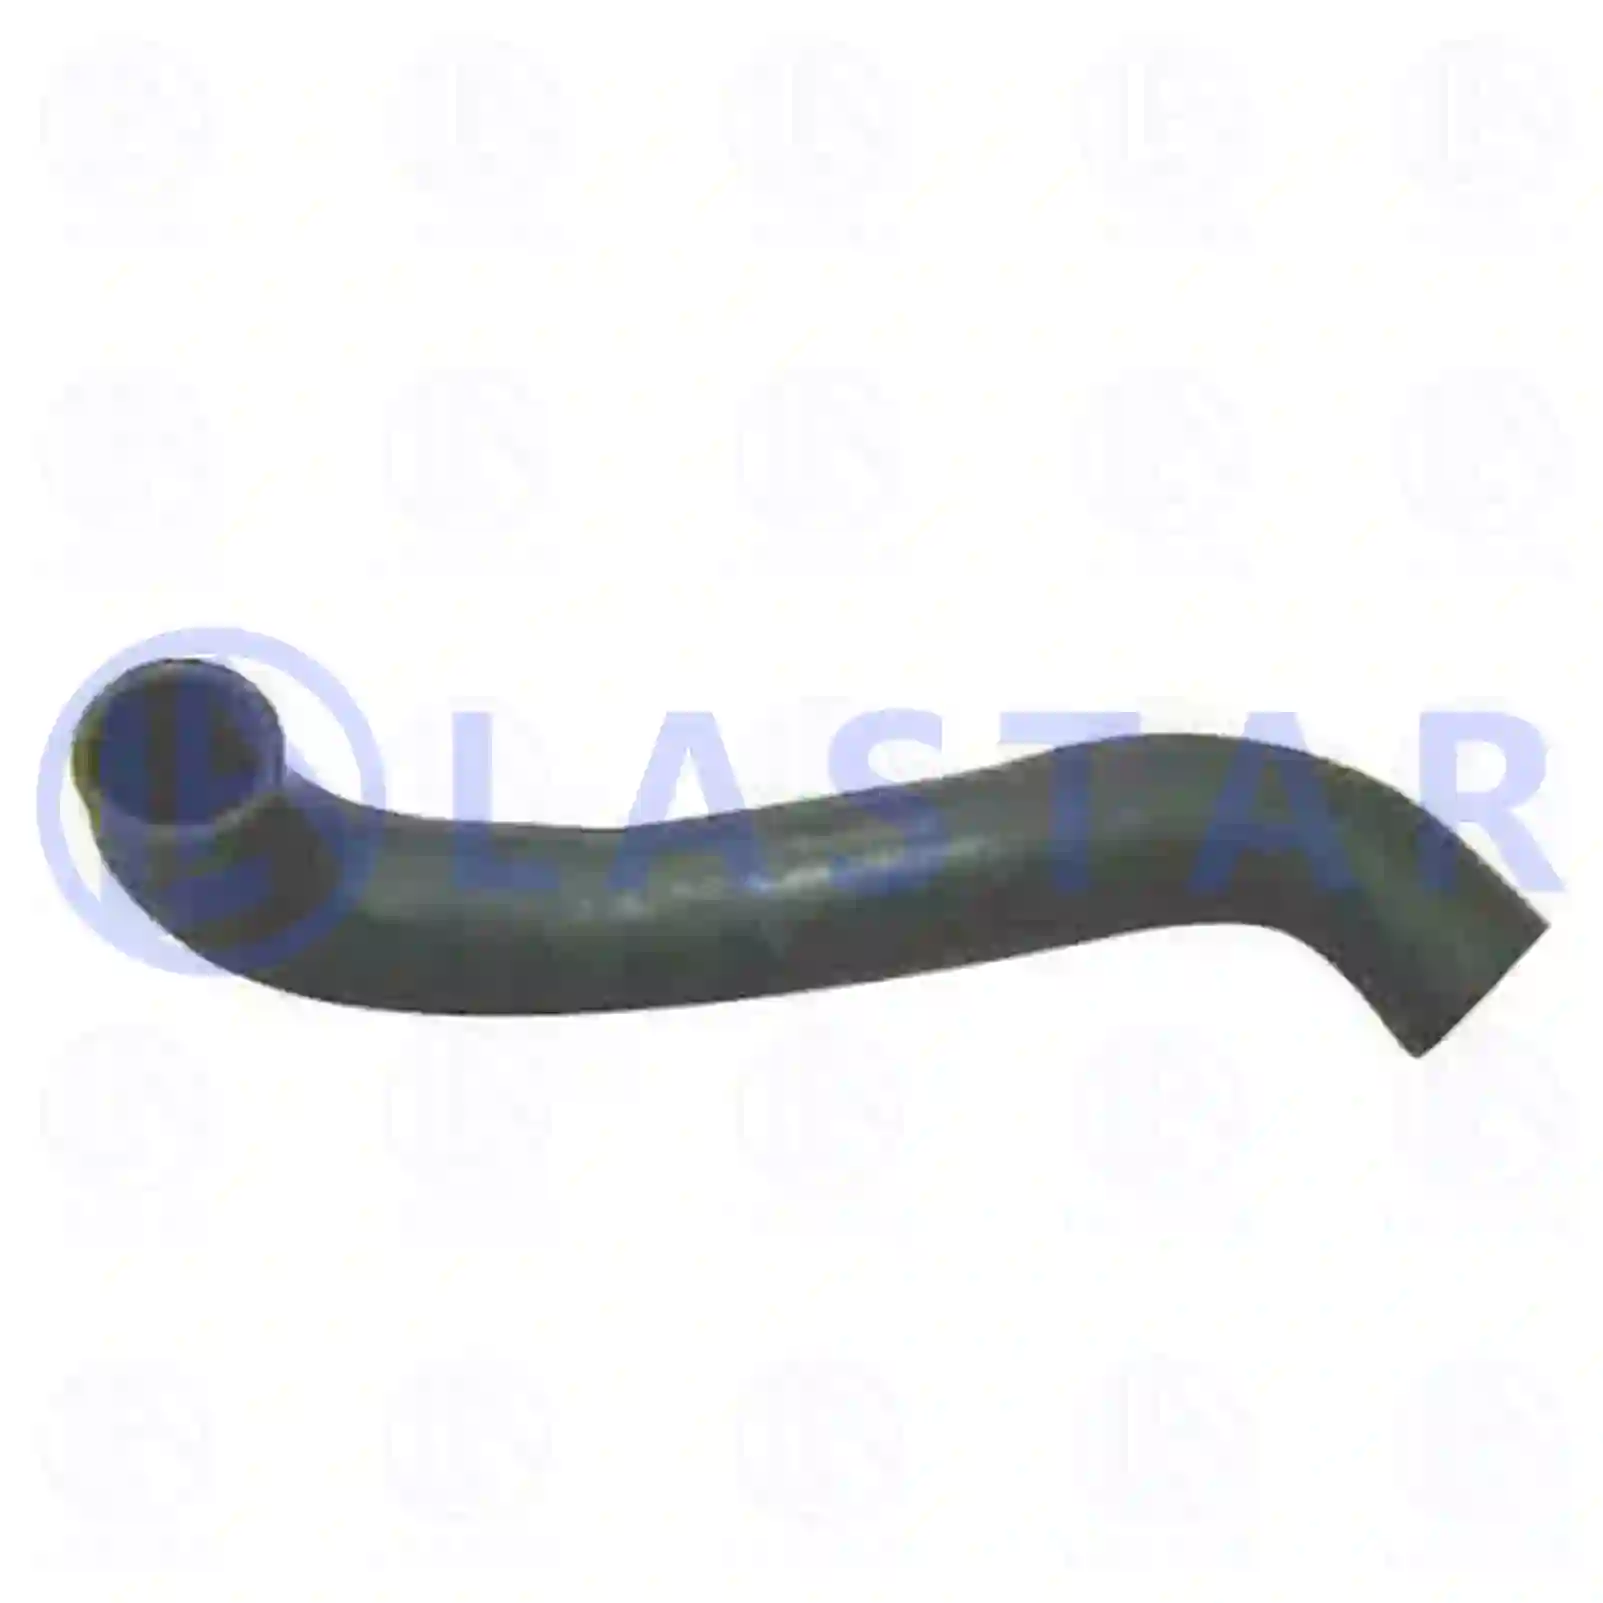  Radiator hose || Lastar Spare Part | Truck Spare Parts, Auotomotive Spare Parts